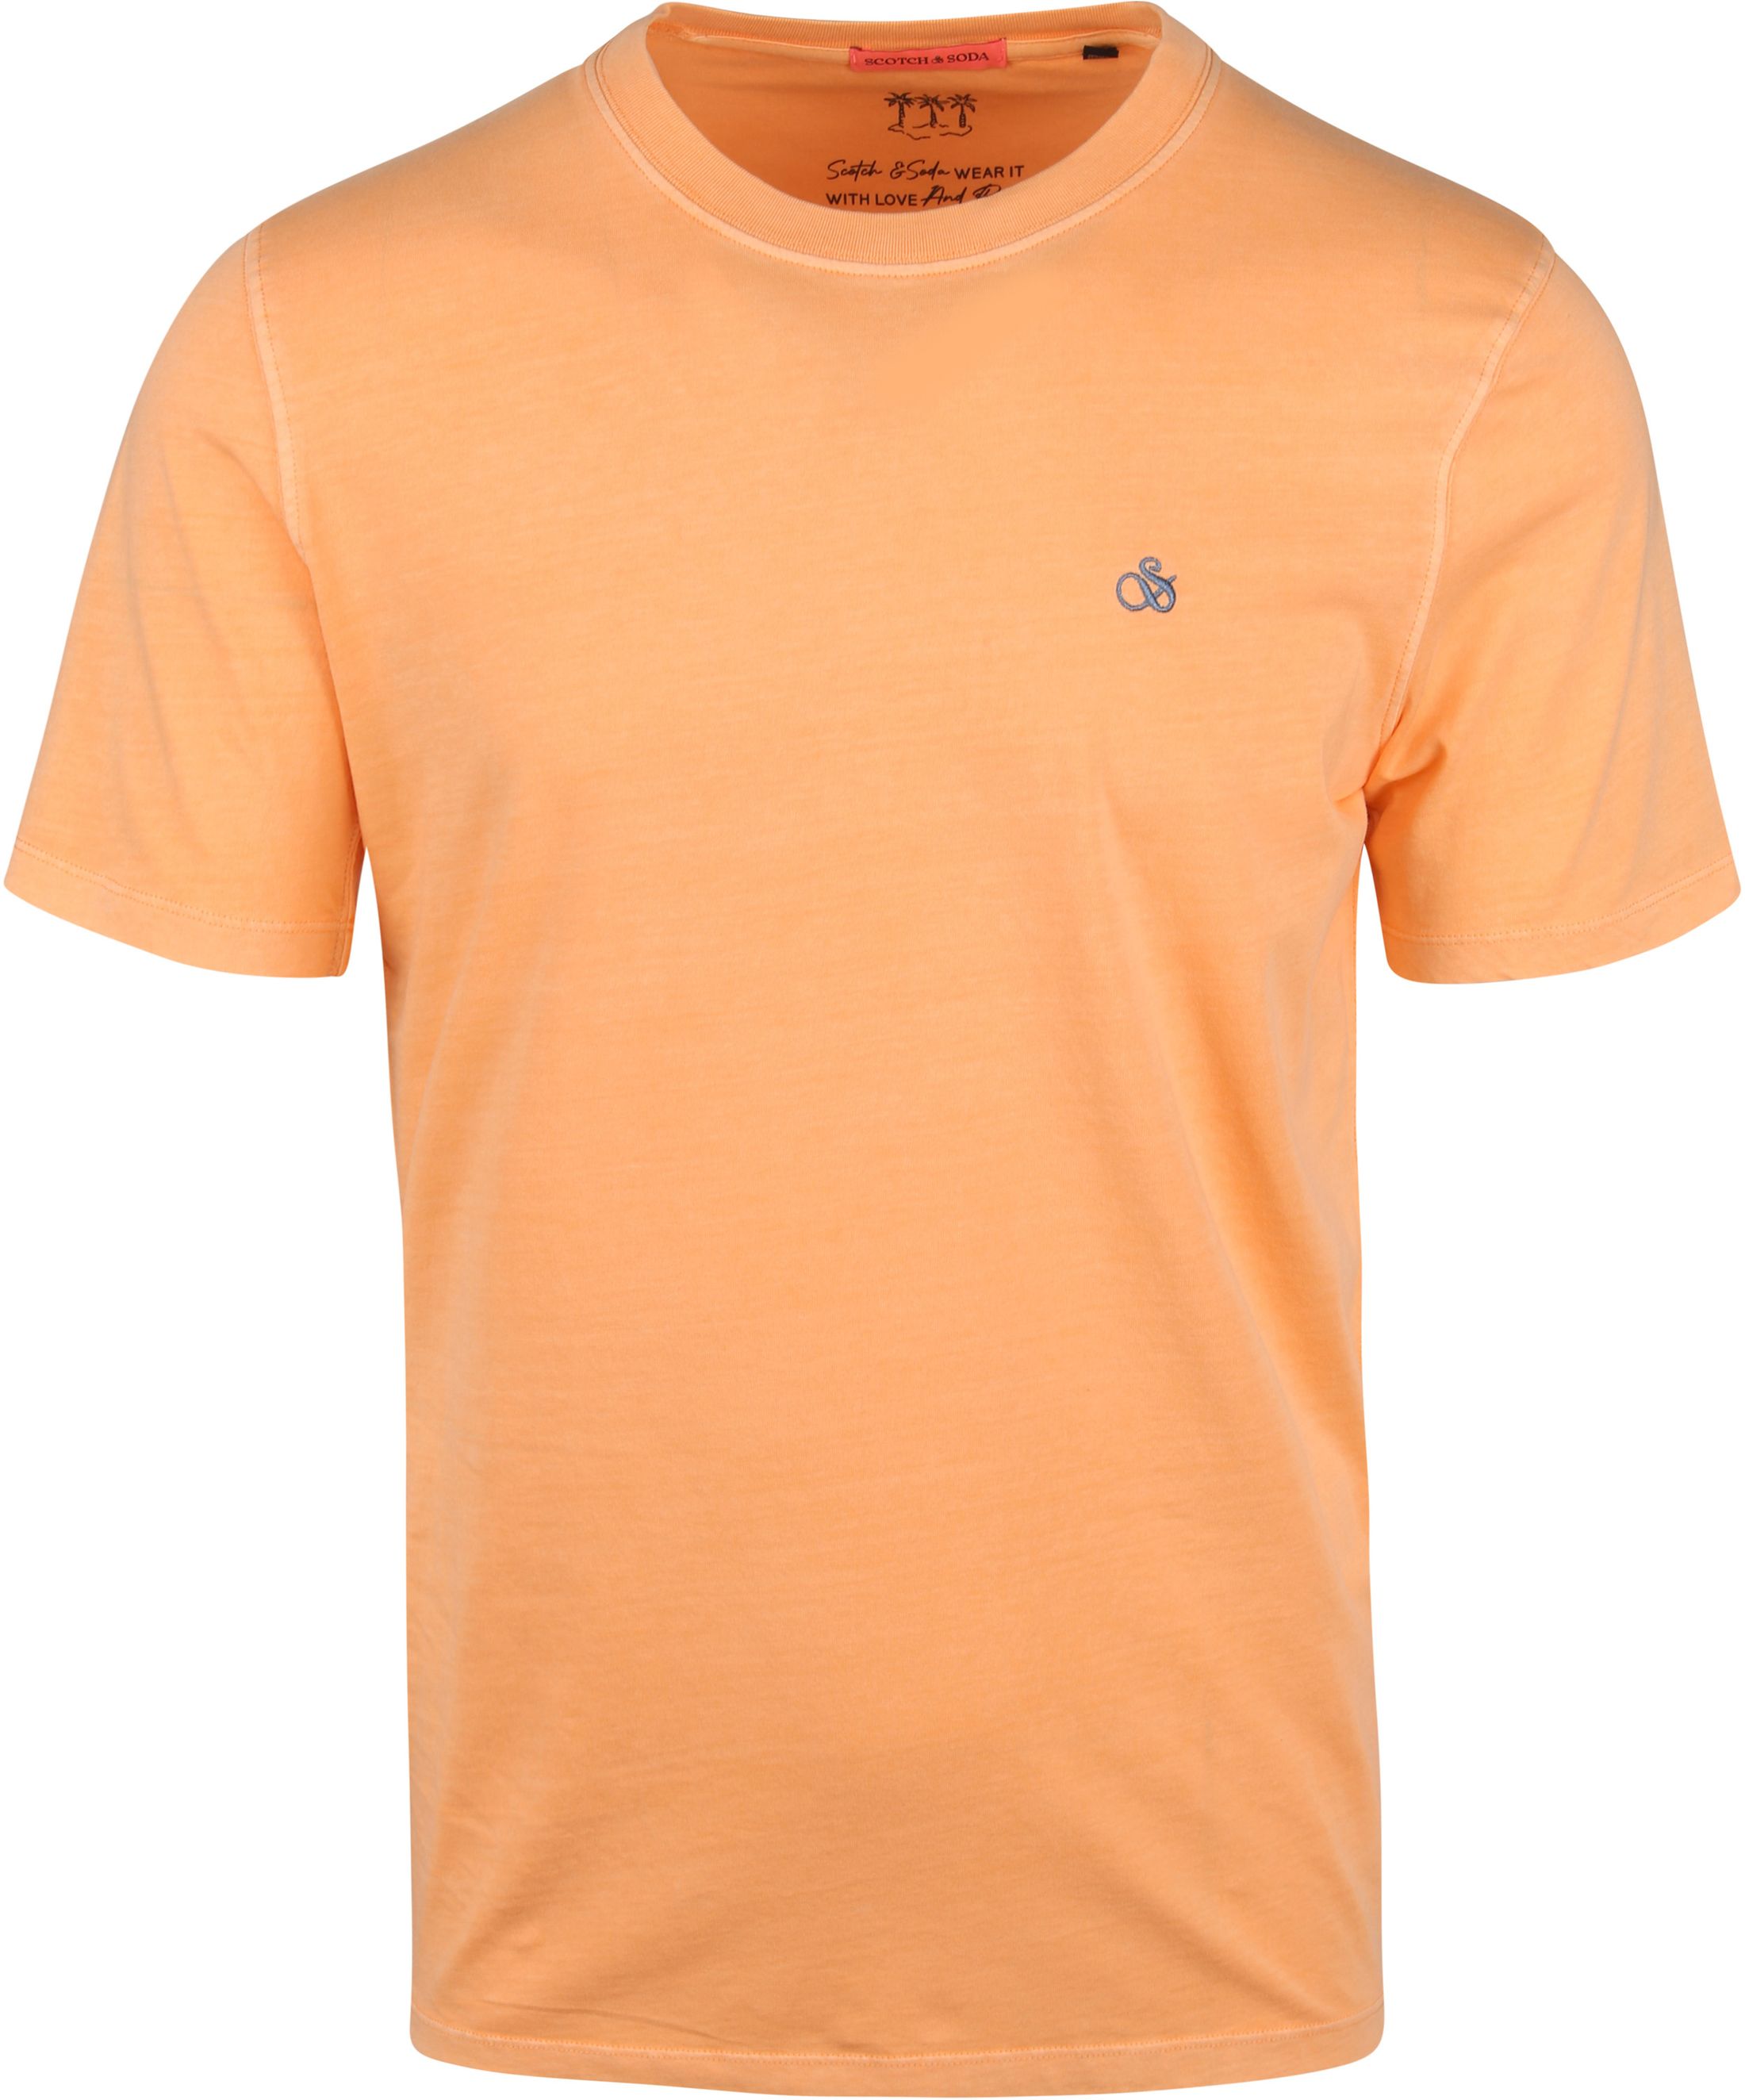 Scotch & Soda T-Shirt Jersey Orange size L